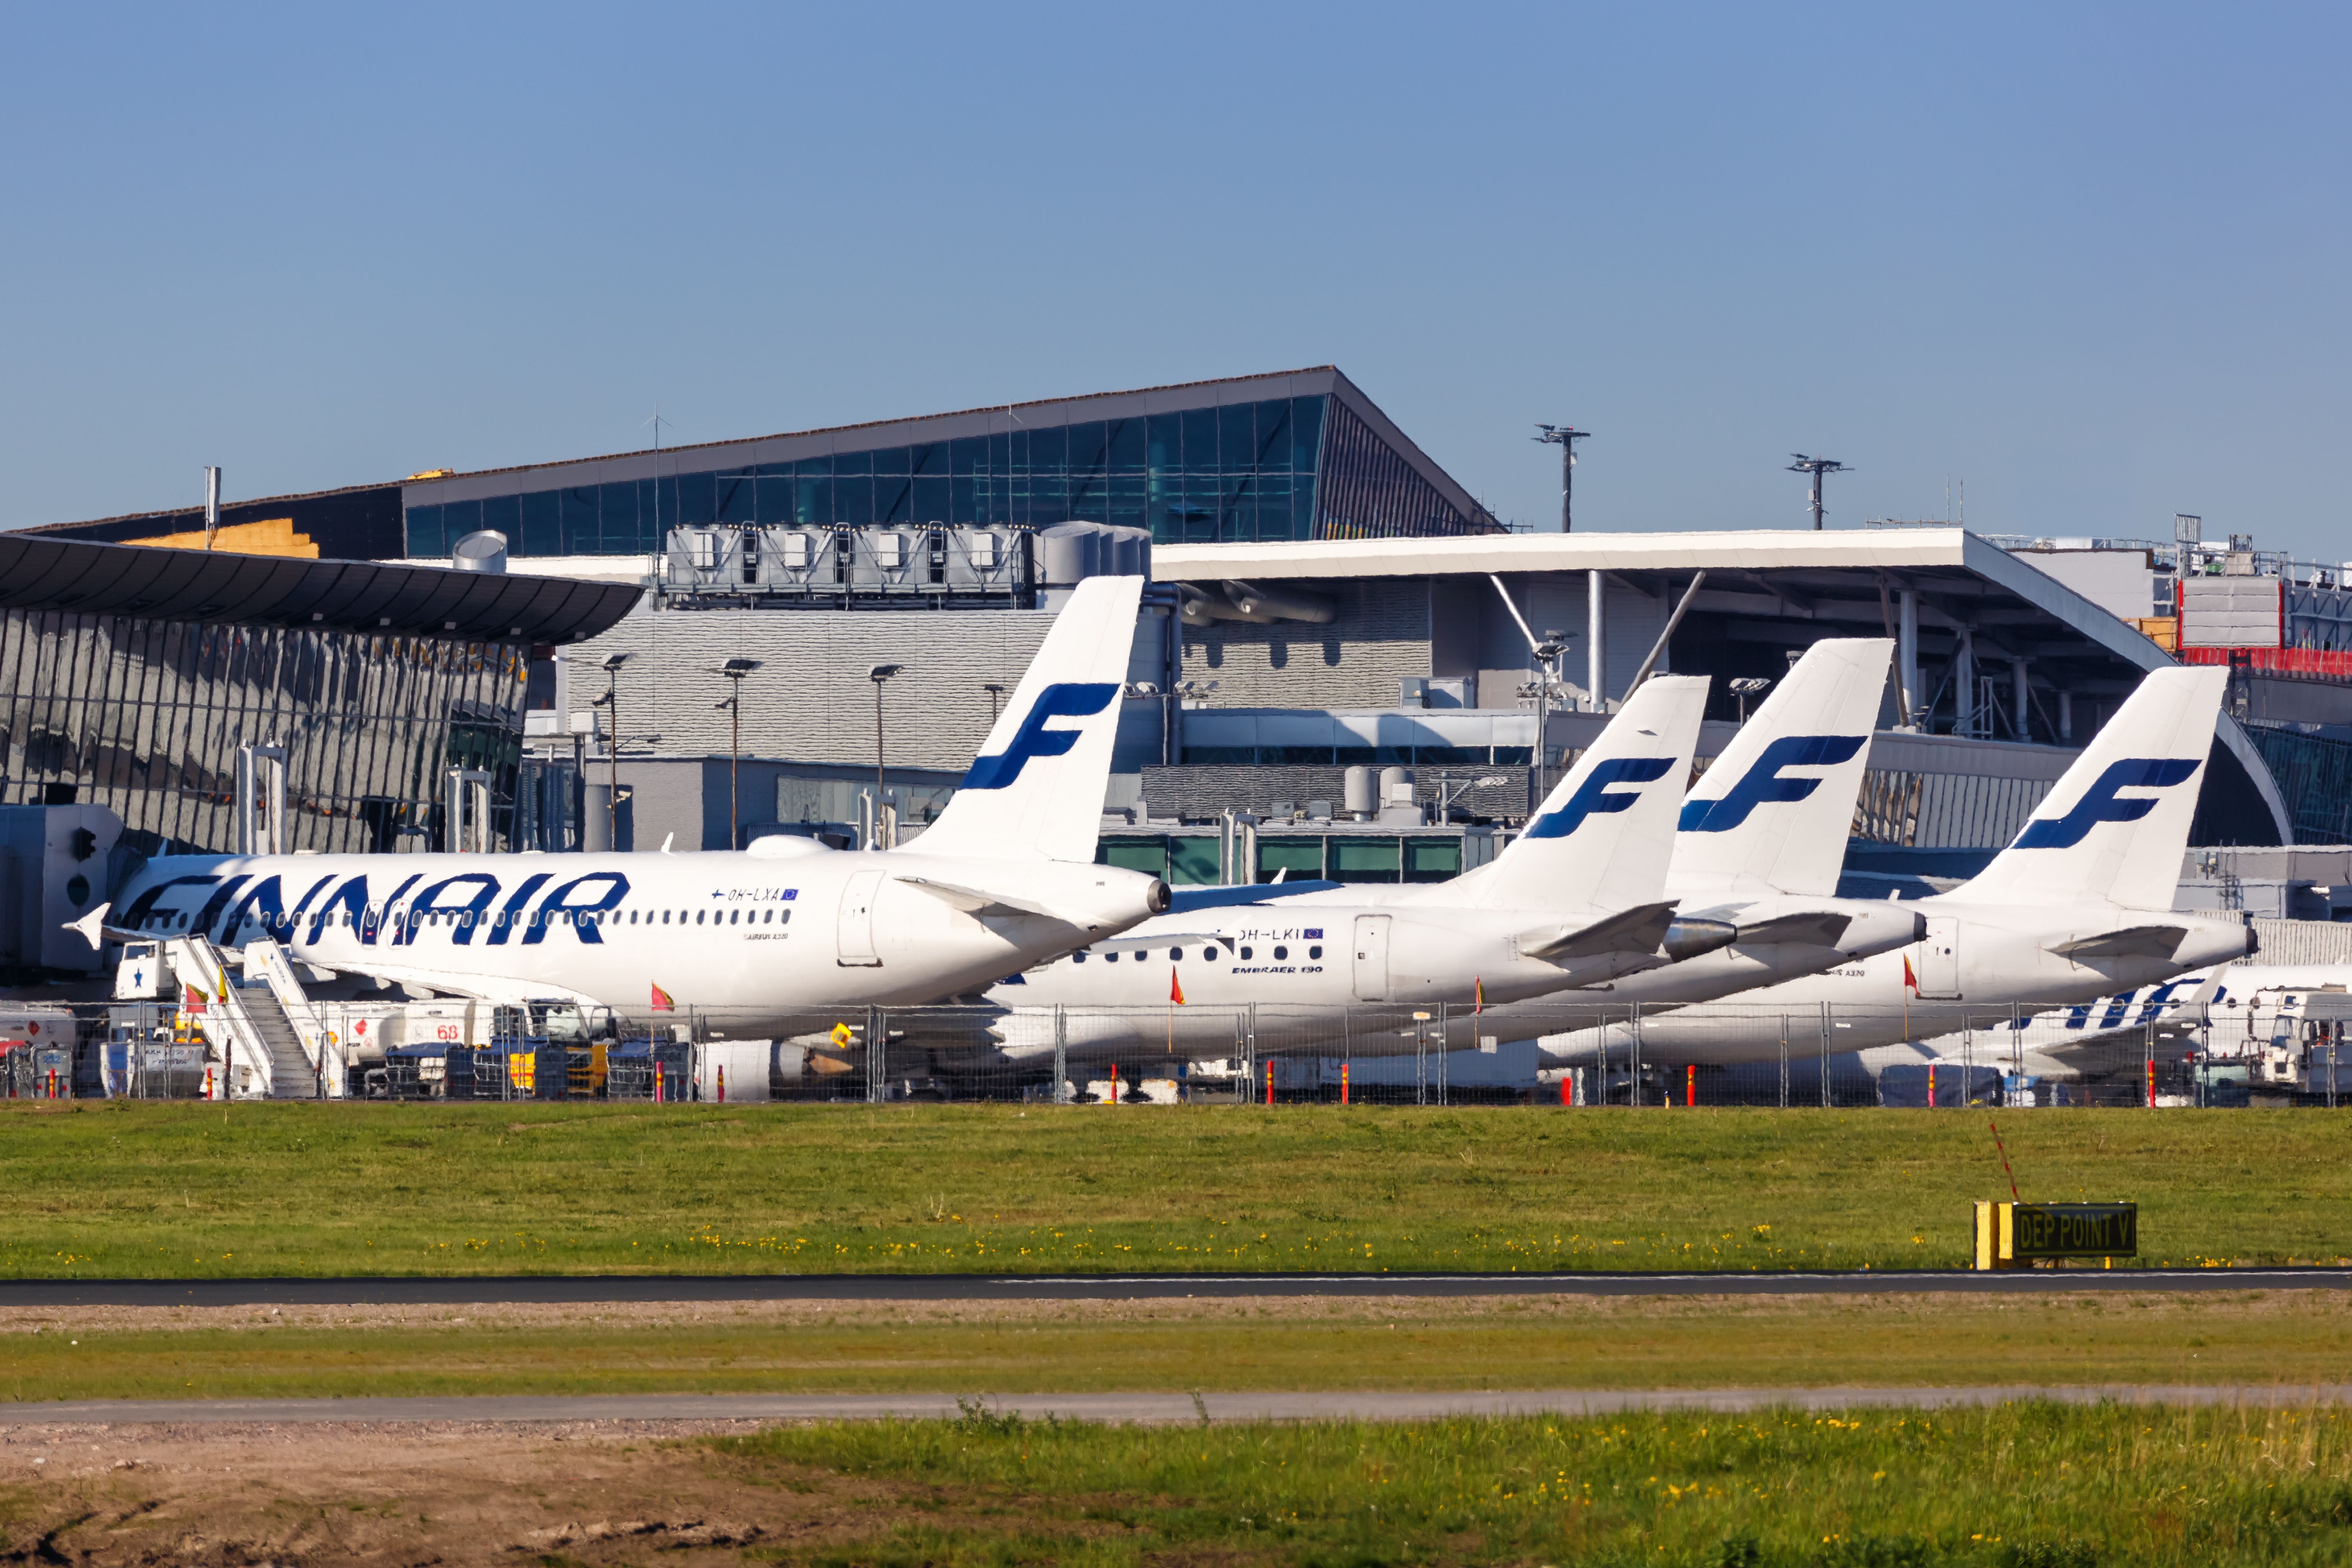 Finnair Airbus A320 aircraft at Helsinki Airport HEL shutterstock_1615342291